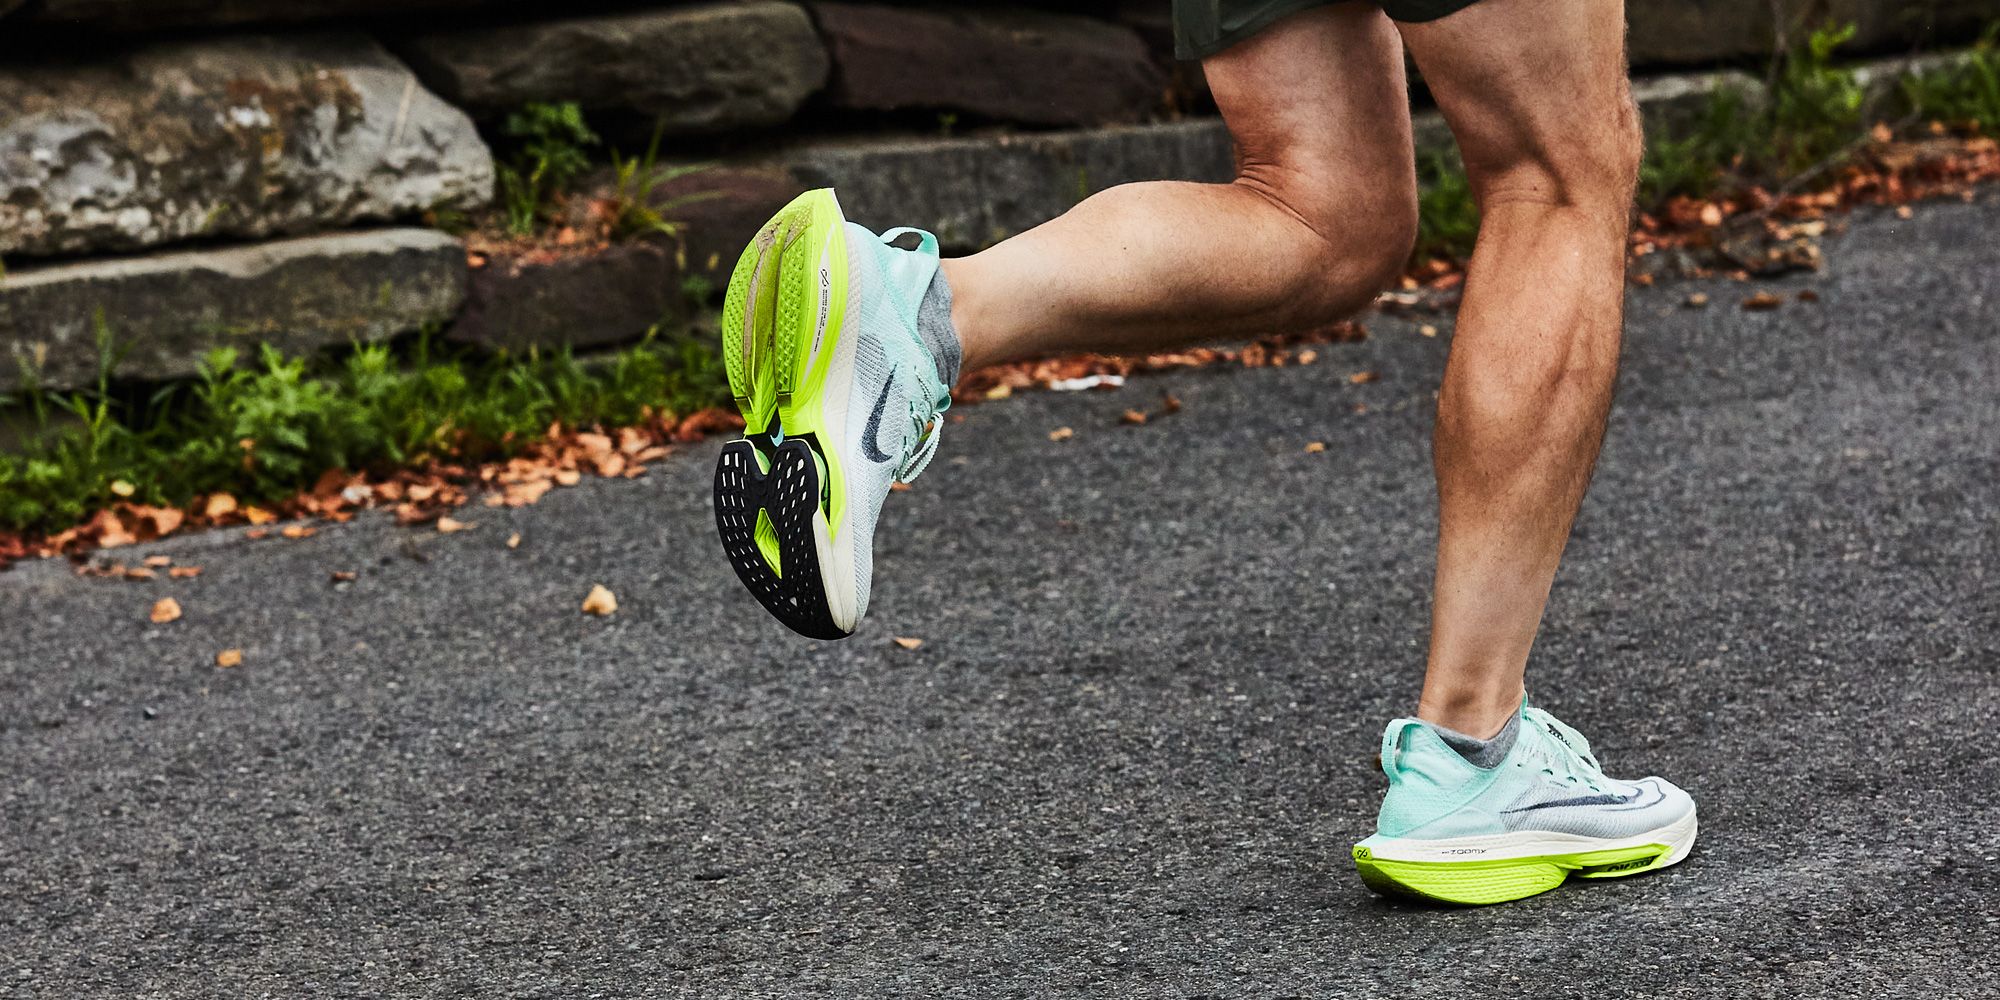 Señuelo Brillante También The 10 Best Nike Running Shoes of 2023 - Running Shoe Reviews